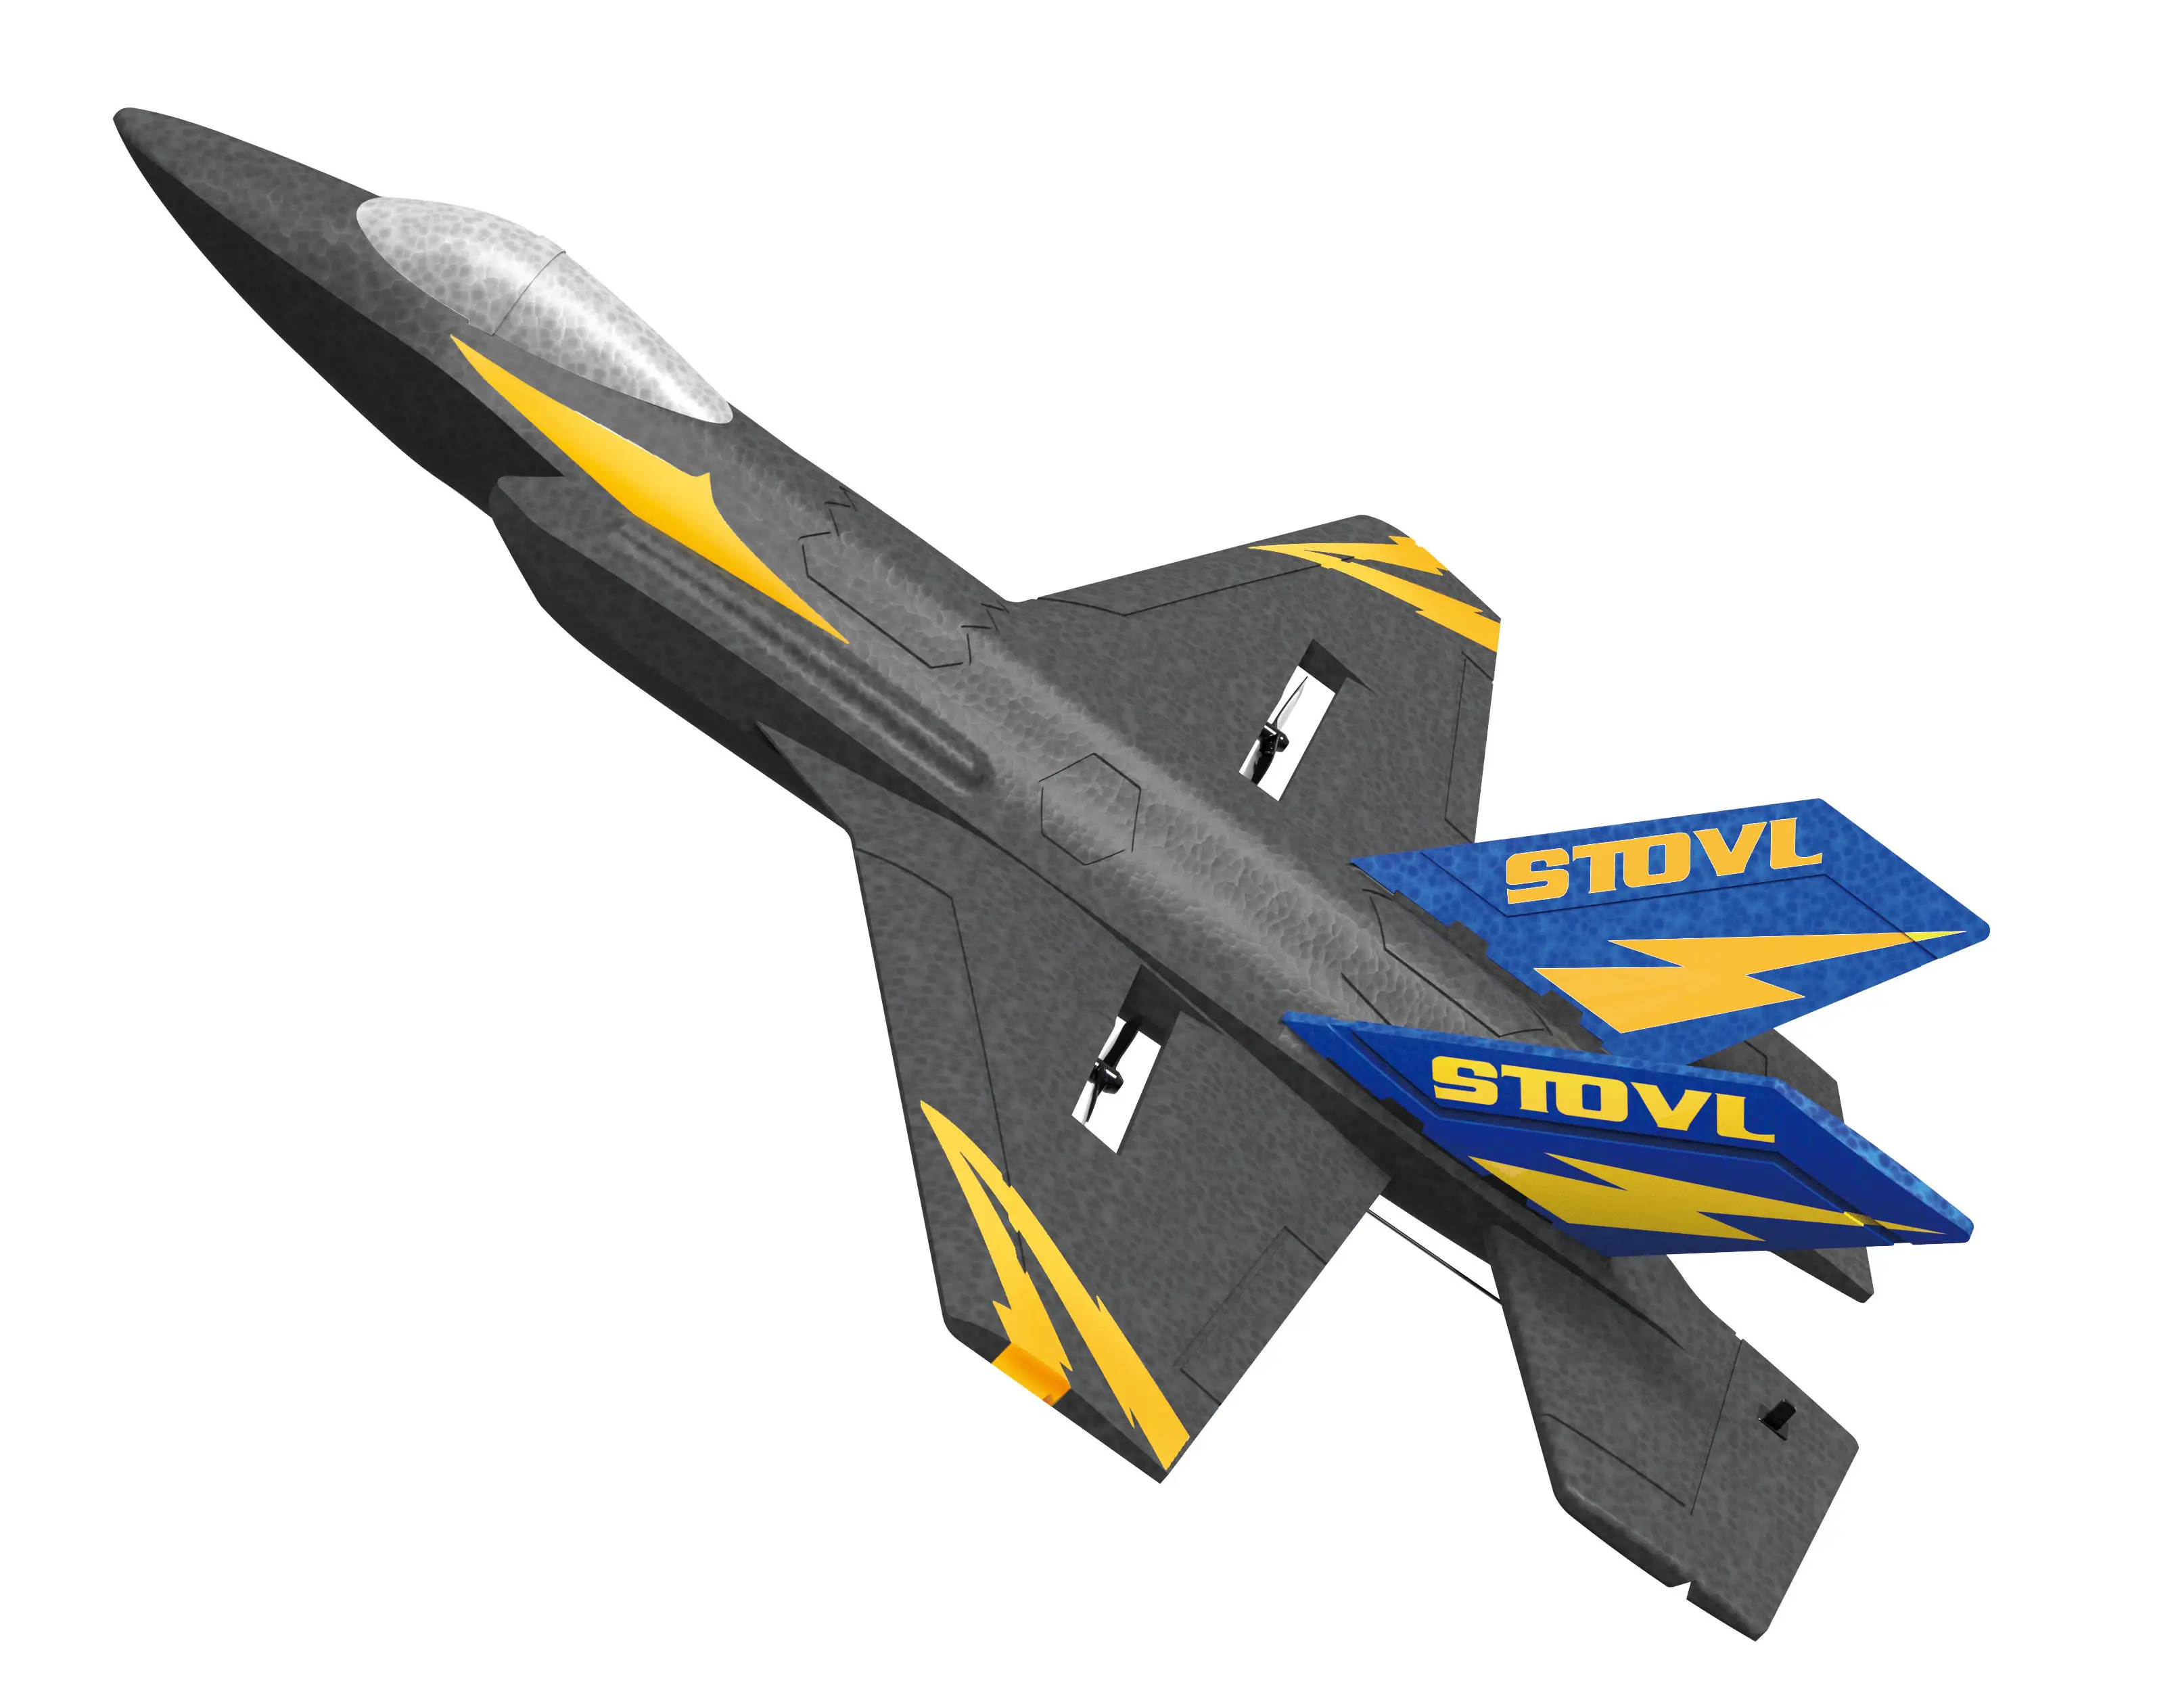 2023 Newest KF605 RC Glider Simulation RC Plane Foam Scale Fighter F35 F-35 Remote Control Model Airplane